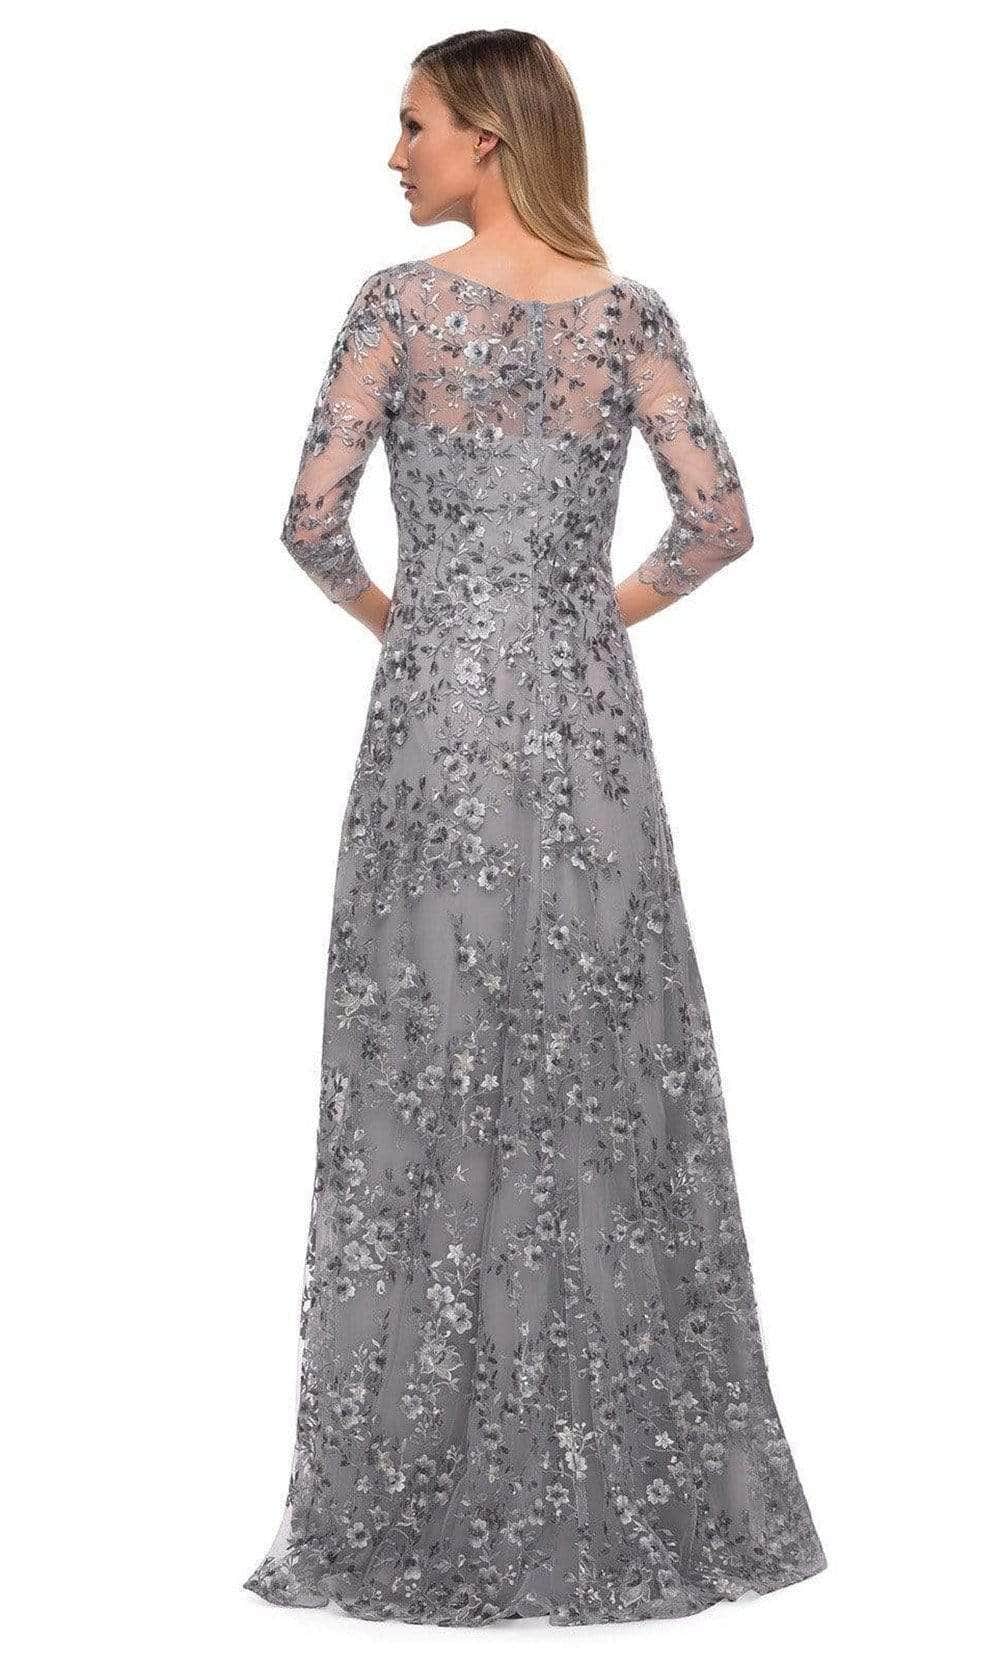 La Femme - 29903 Quarter Sleeve Bateau Neck Formal Dress - 1 pc Silver In Size 14 Available CCSALE 14 / Silver